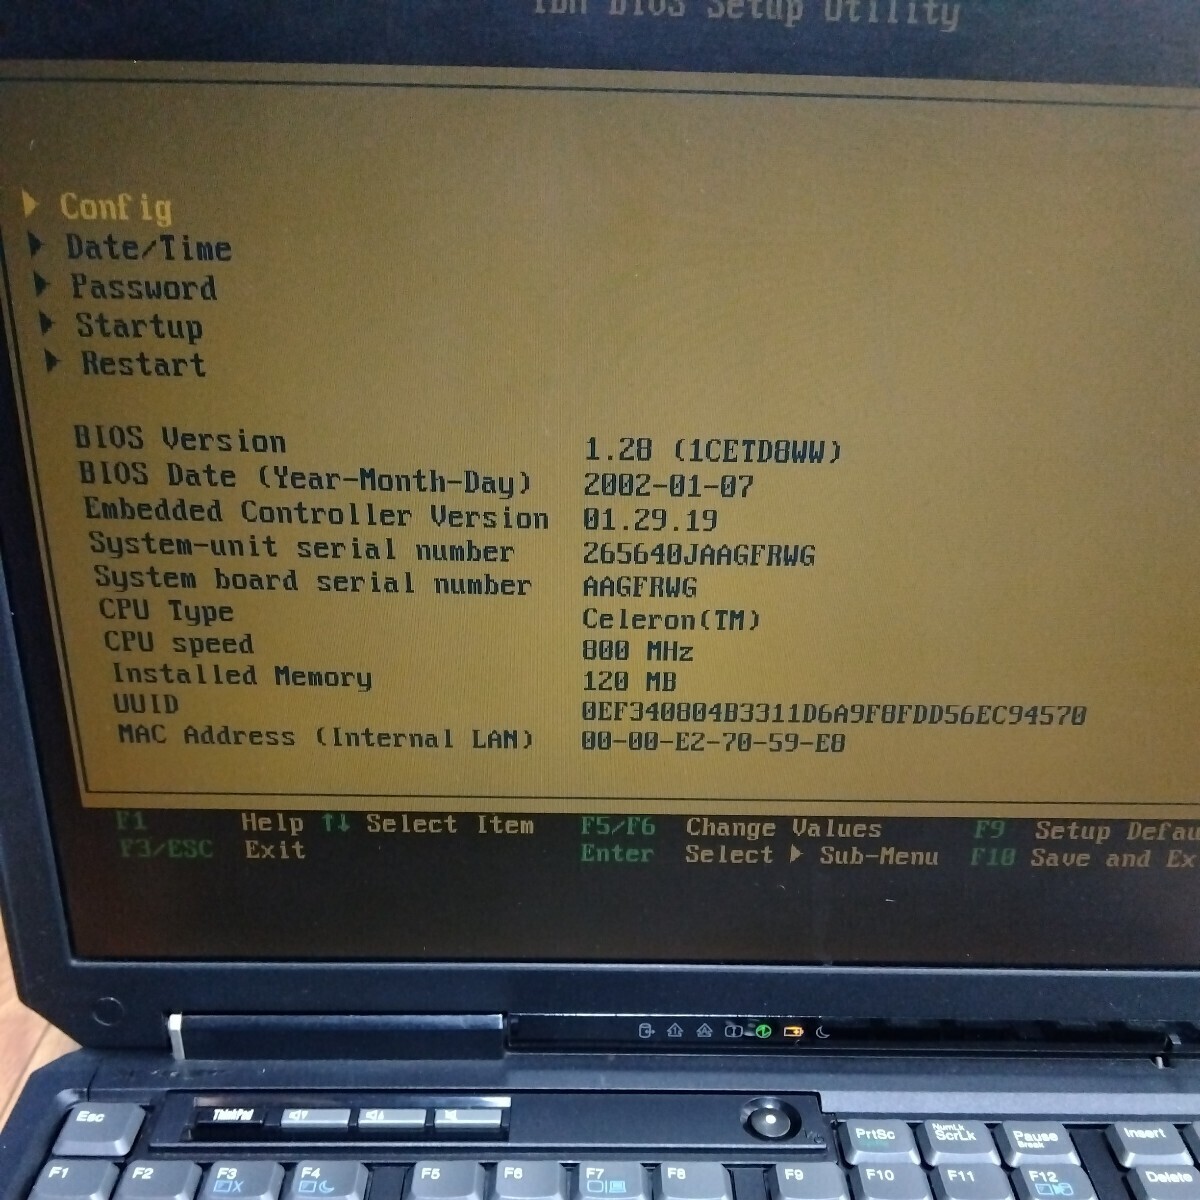  ultra rare IBM ThinkPad Windows98 laptop Type 2656-40J SNAA-GFRWG 02/04 secondhand goods Junk 